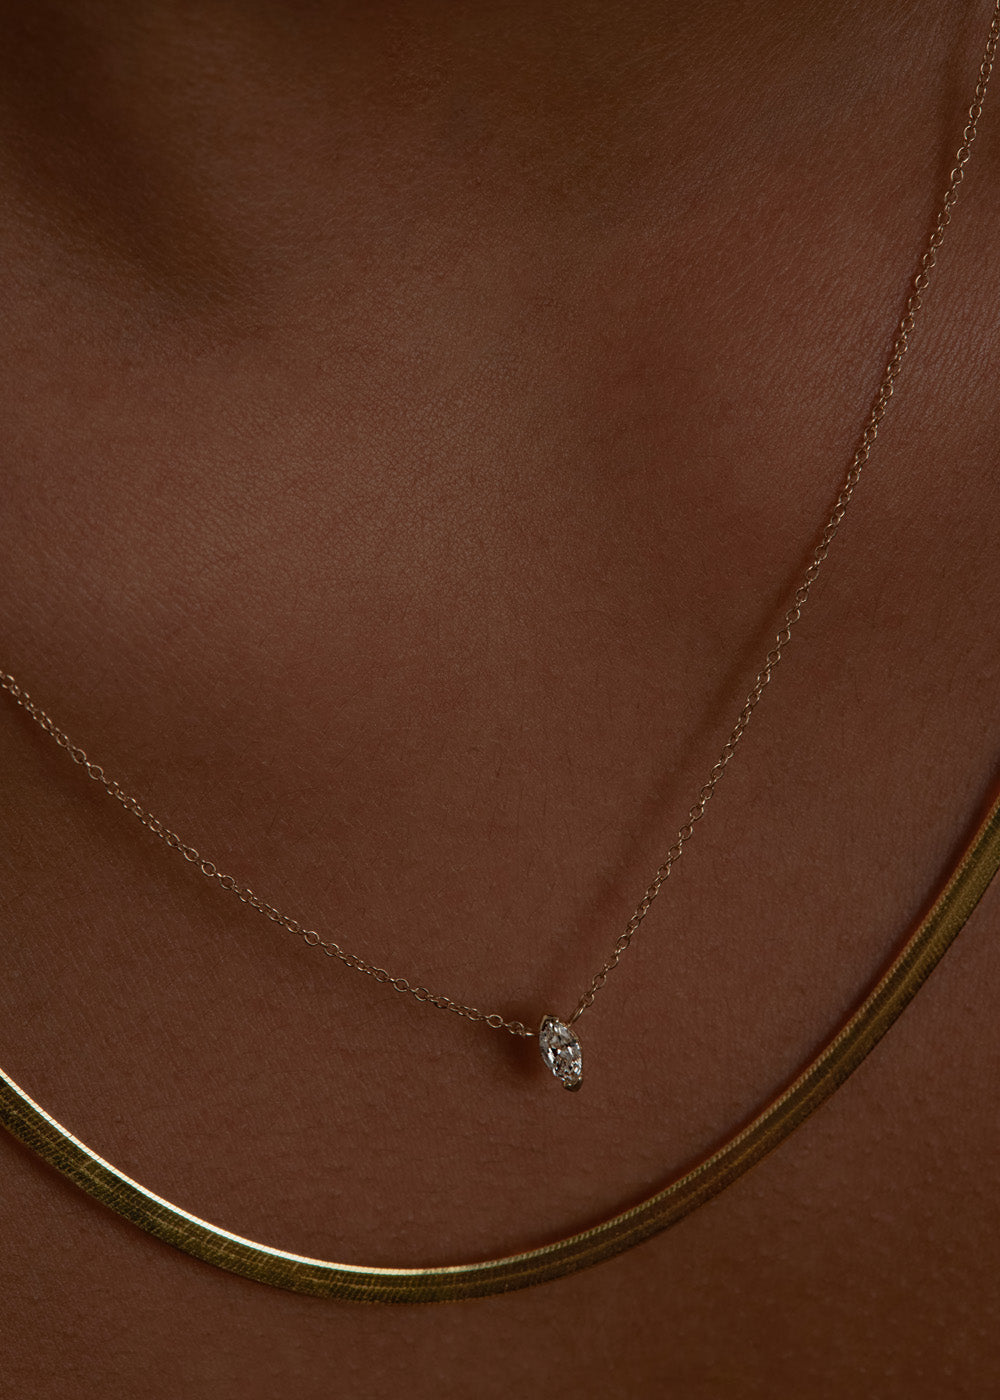 alt="Marquise Diamond Necklace"